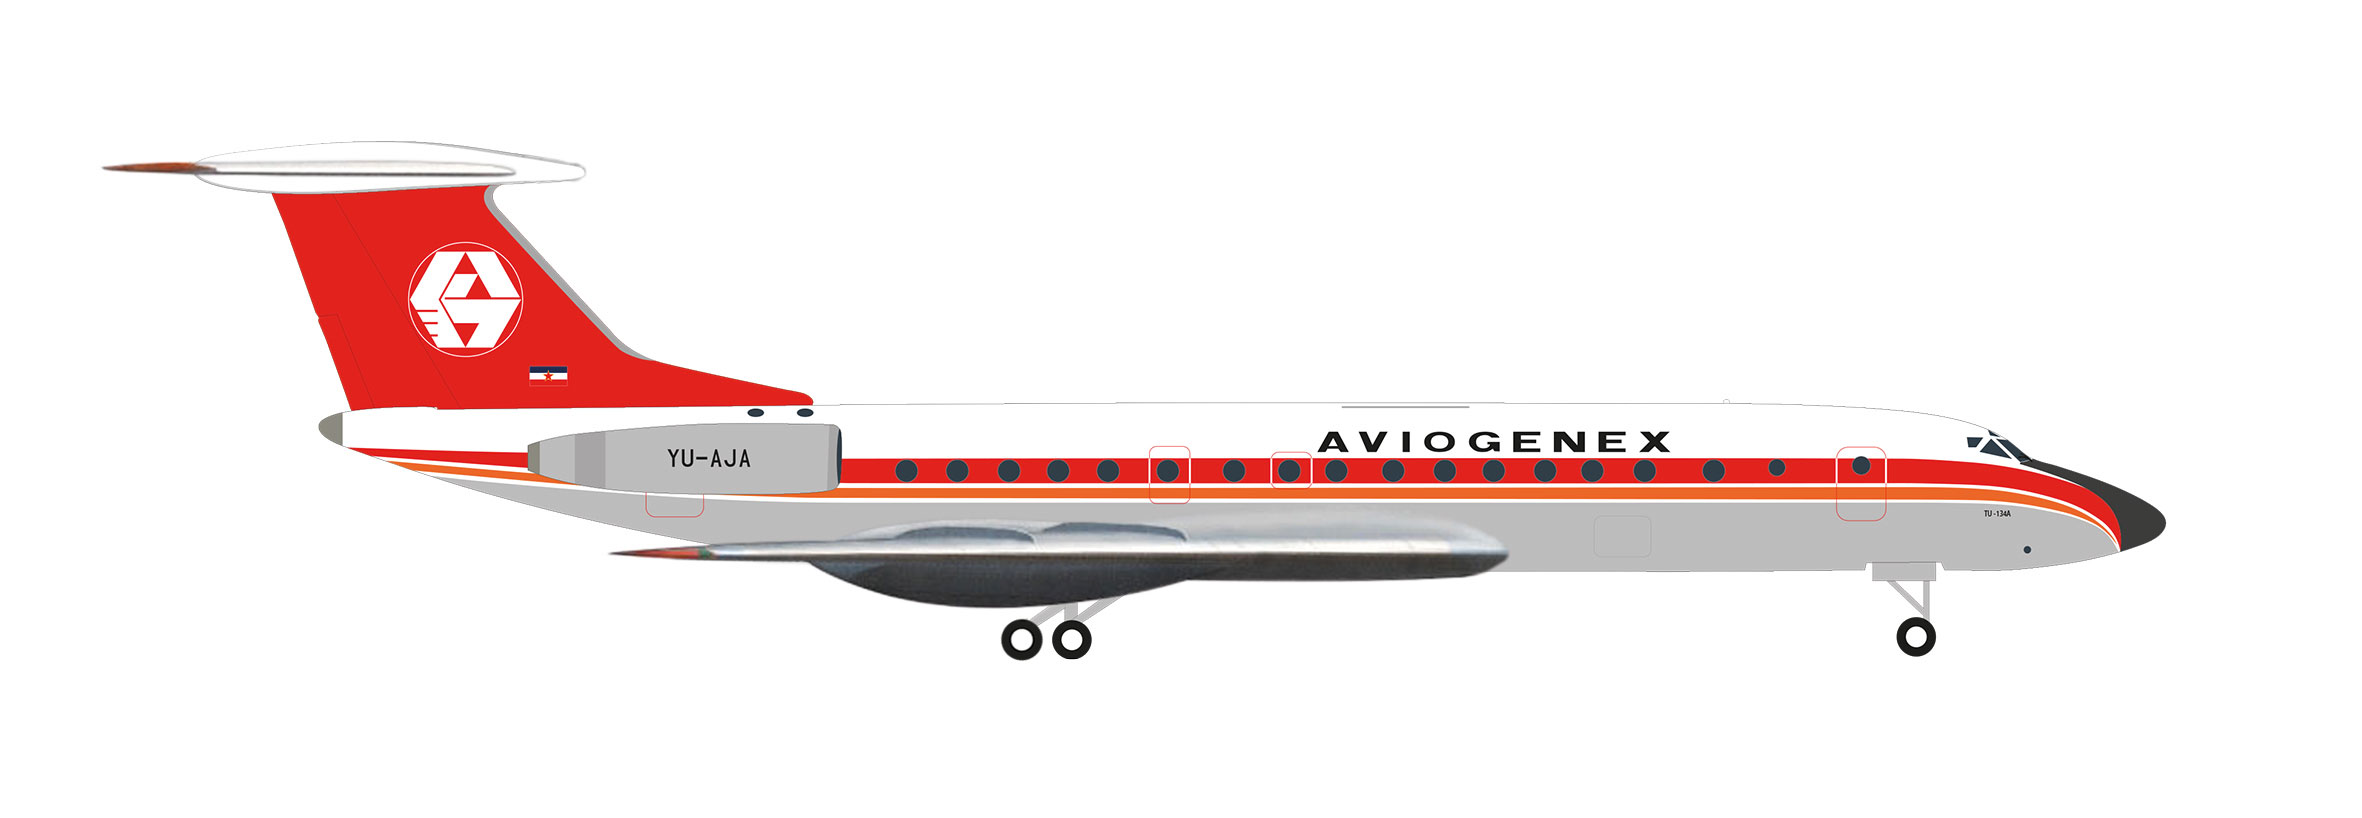 Aviogenex Tupolev TU-134A 